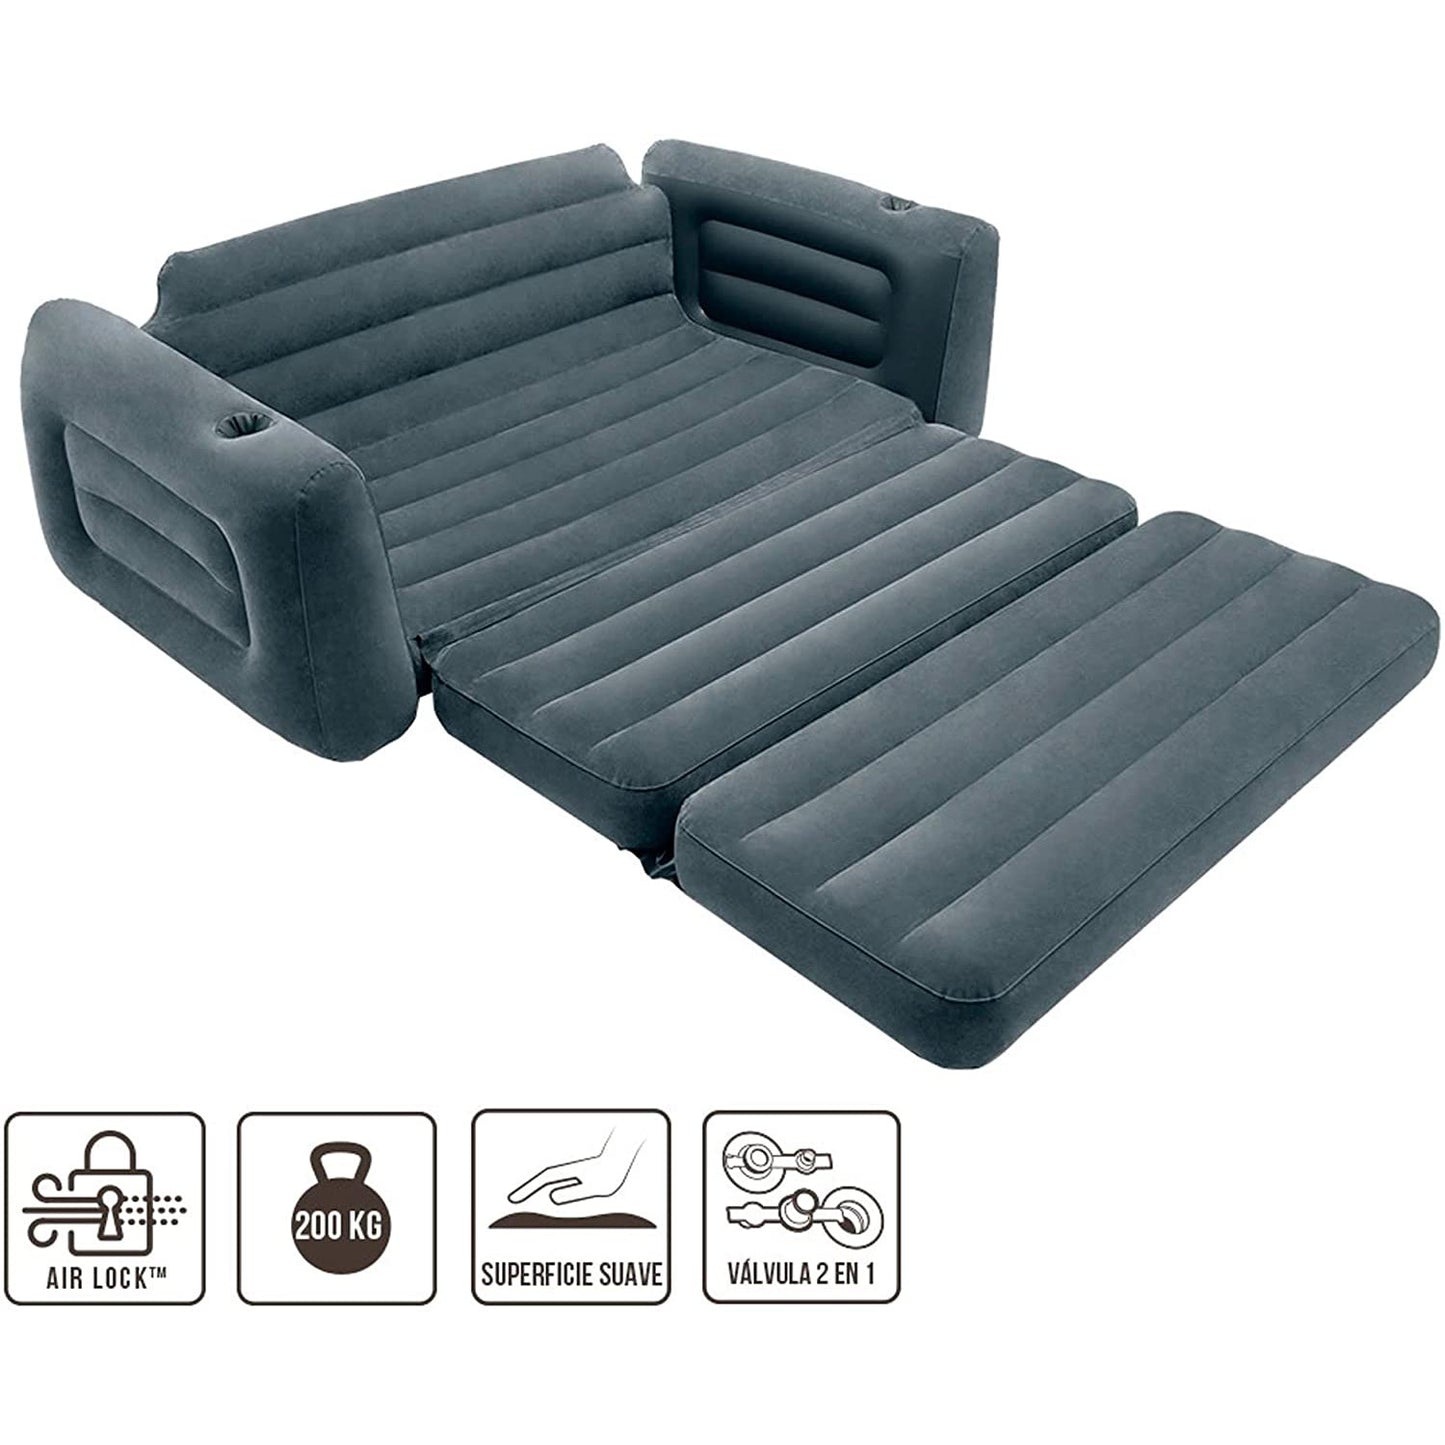 Intex Inflatable Sofa